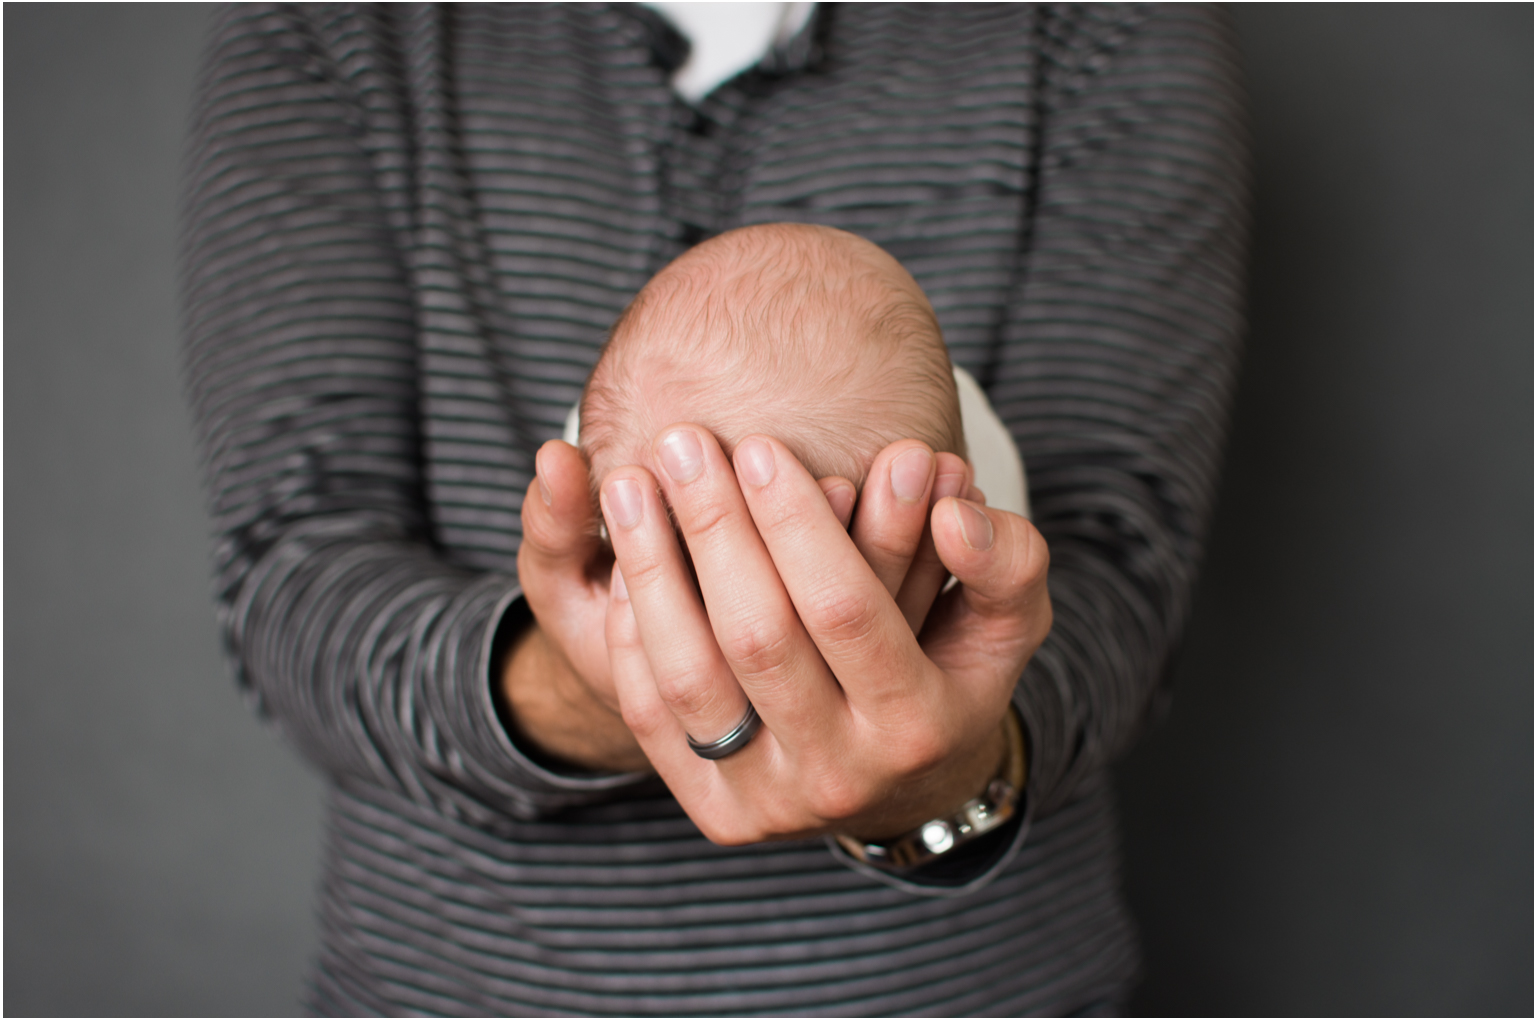 Emerson Brady newborn photos details family portrait daddys hands